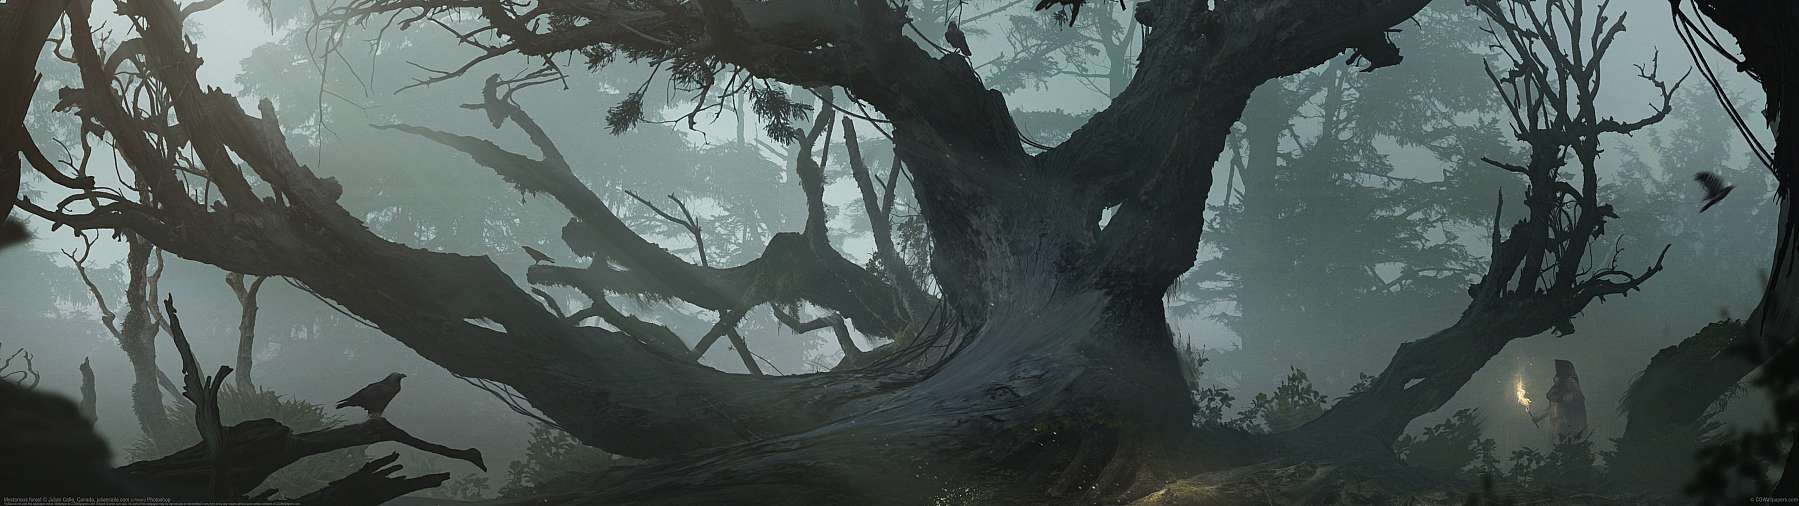 Mysterious forest ultralarge fond d'écran